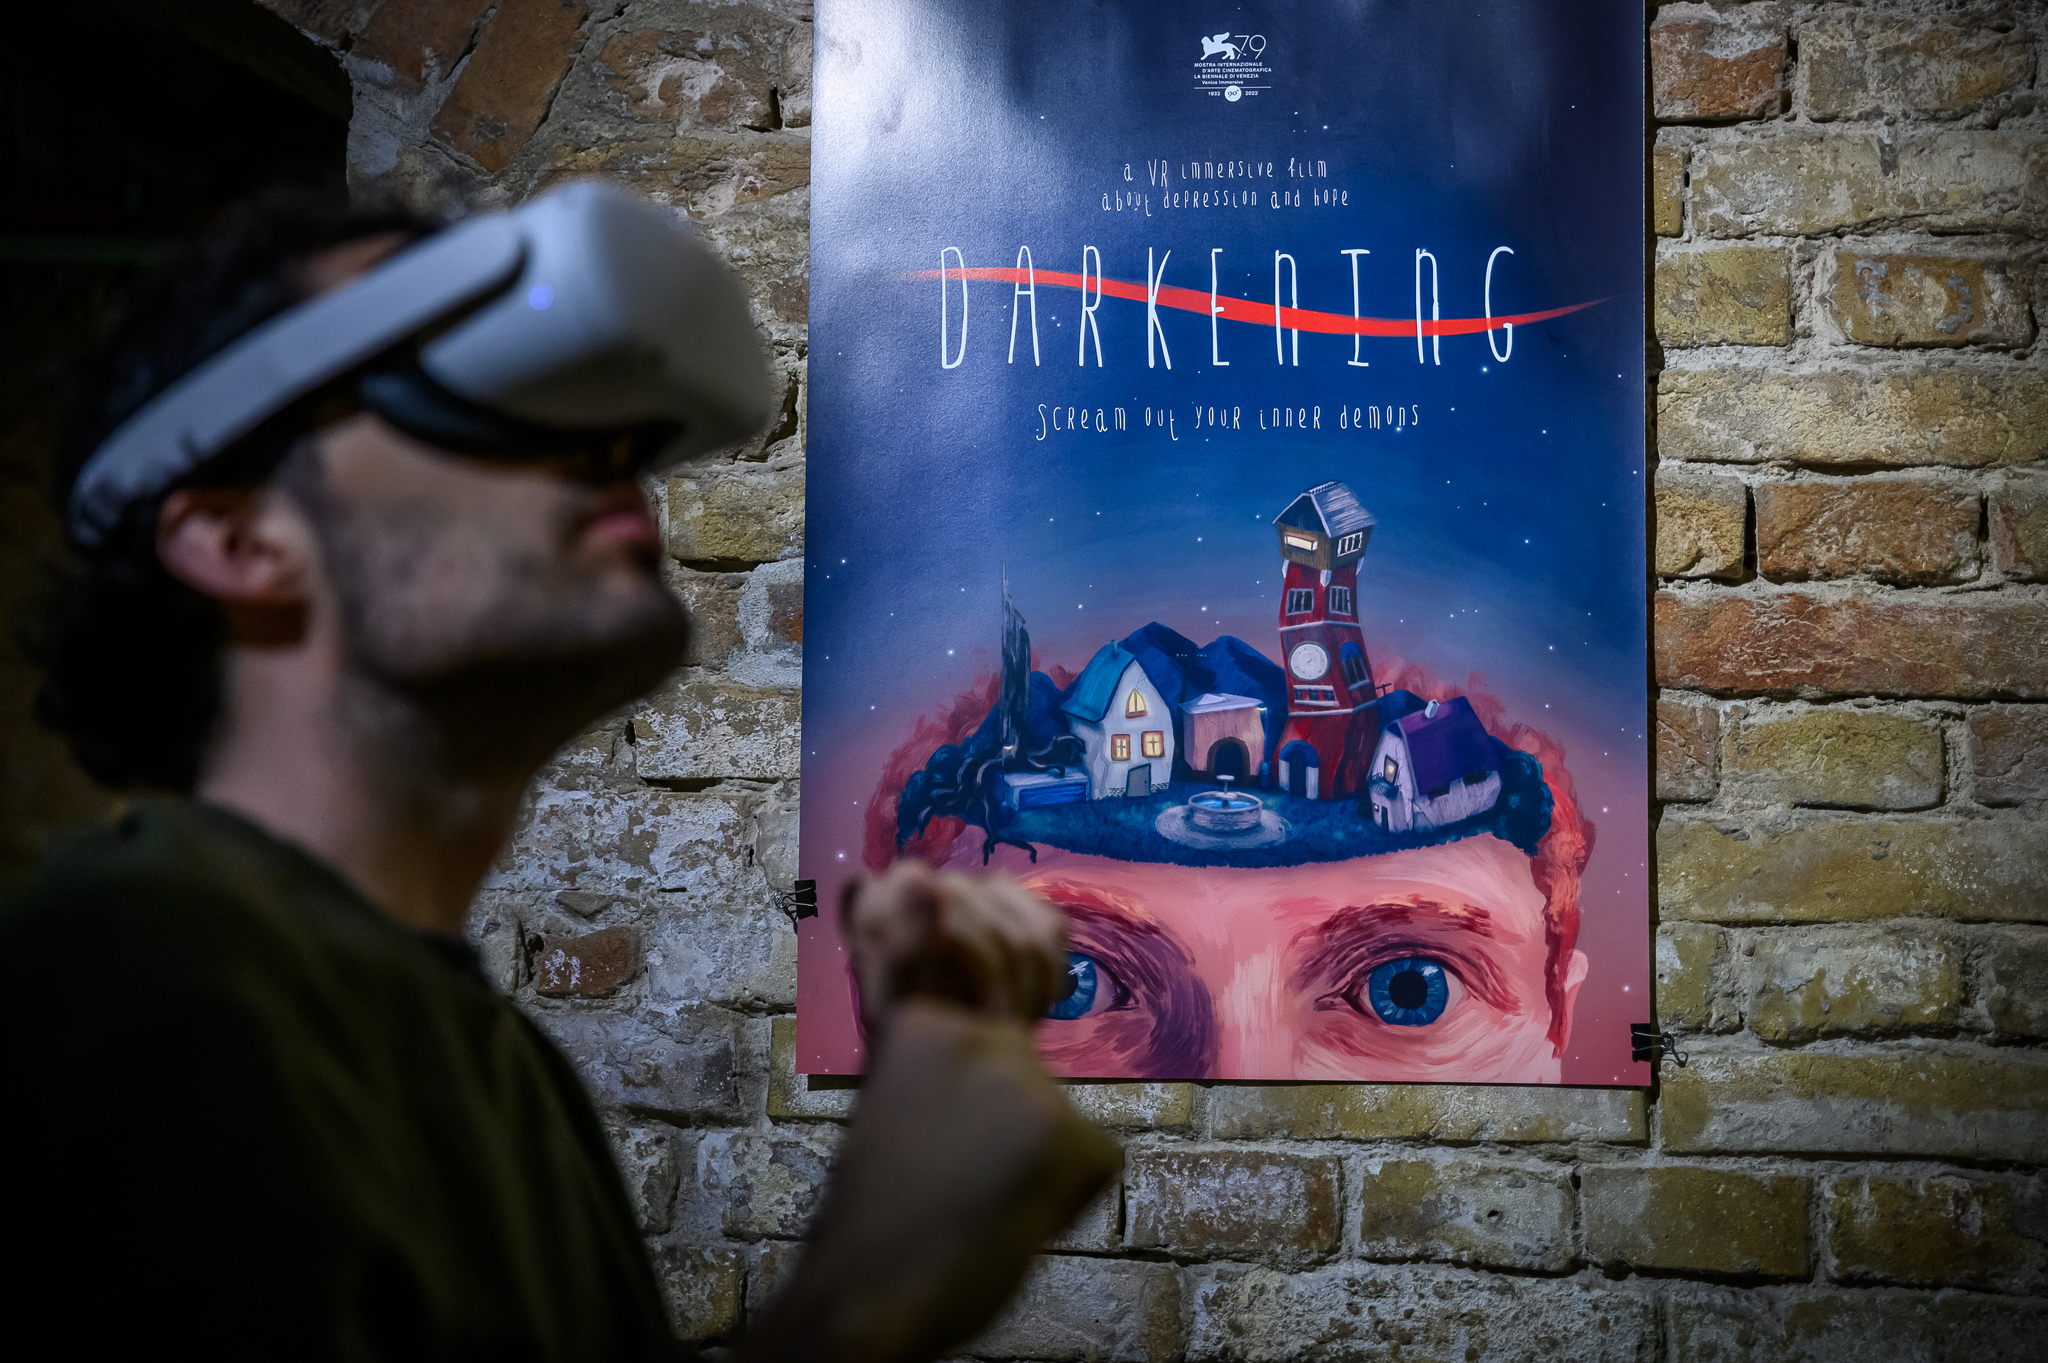 Poster of Darkening, a VR immersive film